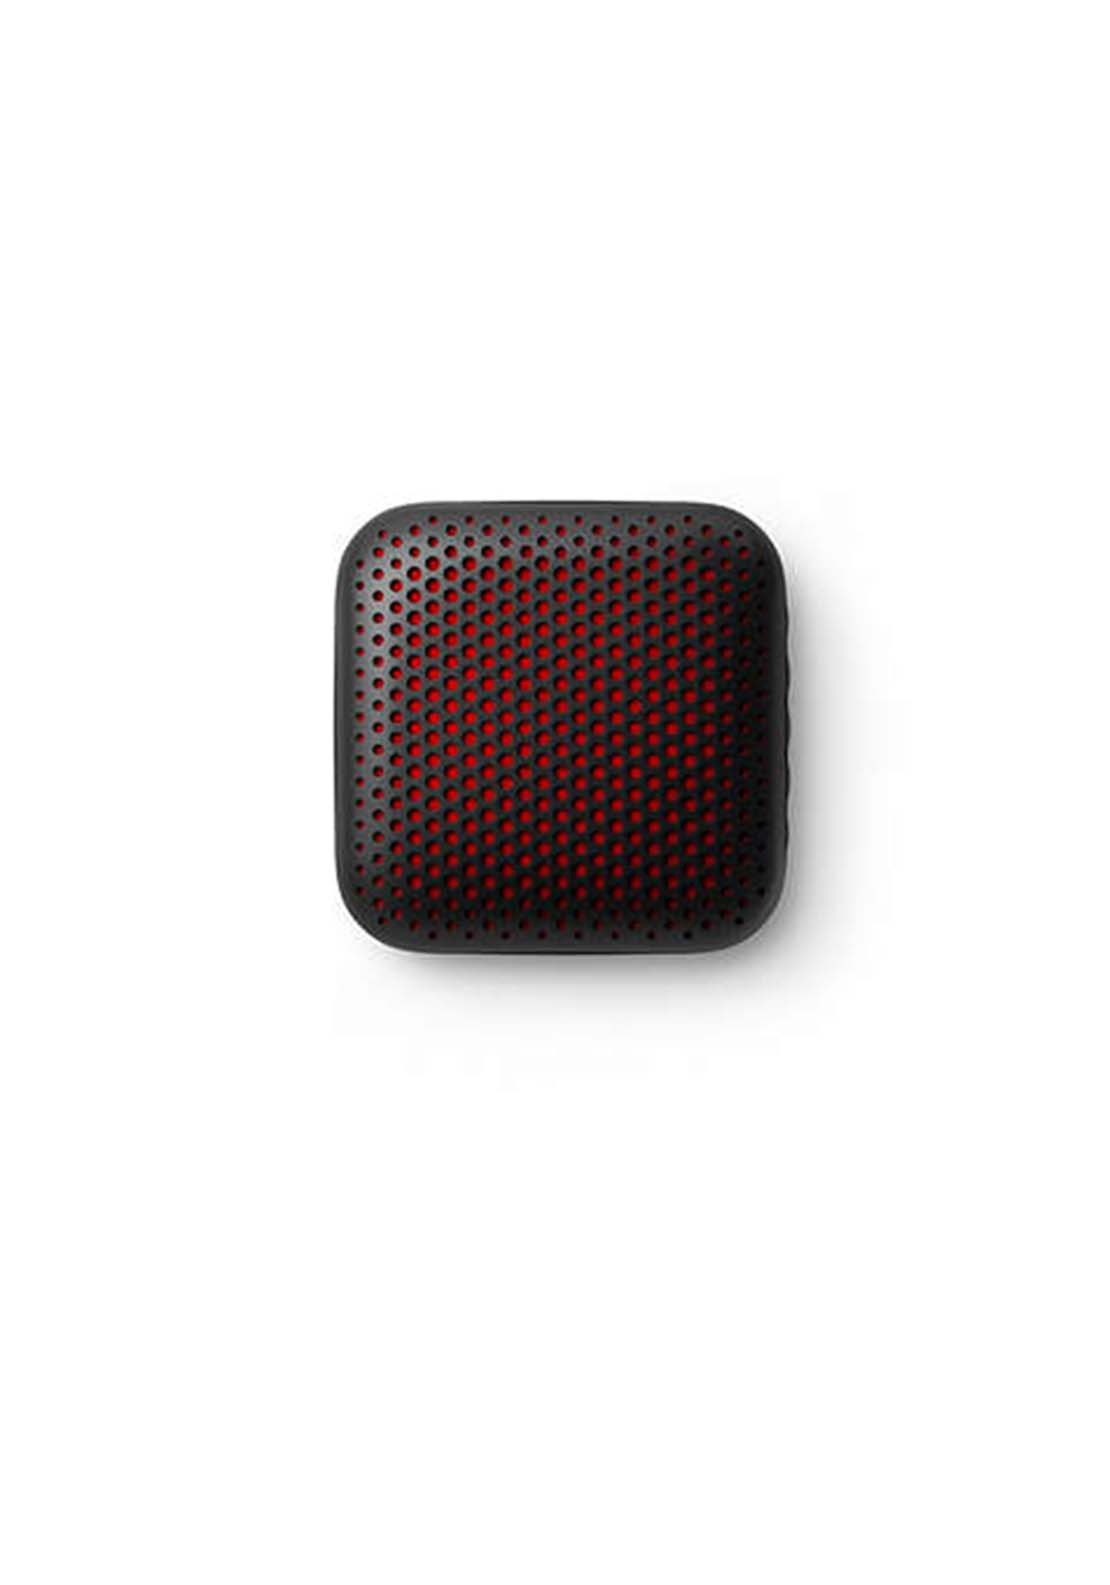 Philips Bluetooth Speaker | Tas2505B00 6 Shaws Department Stores